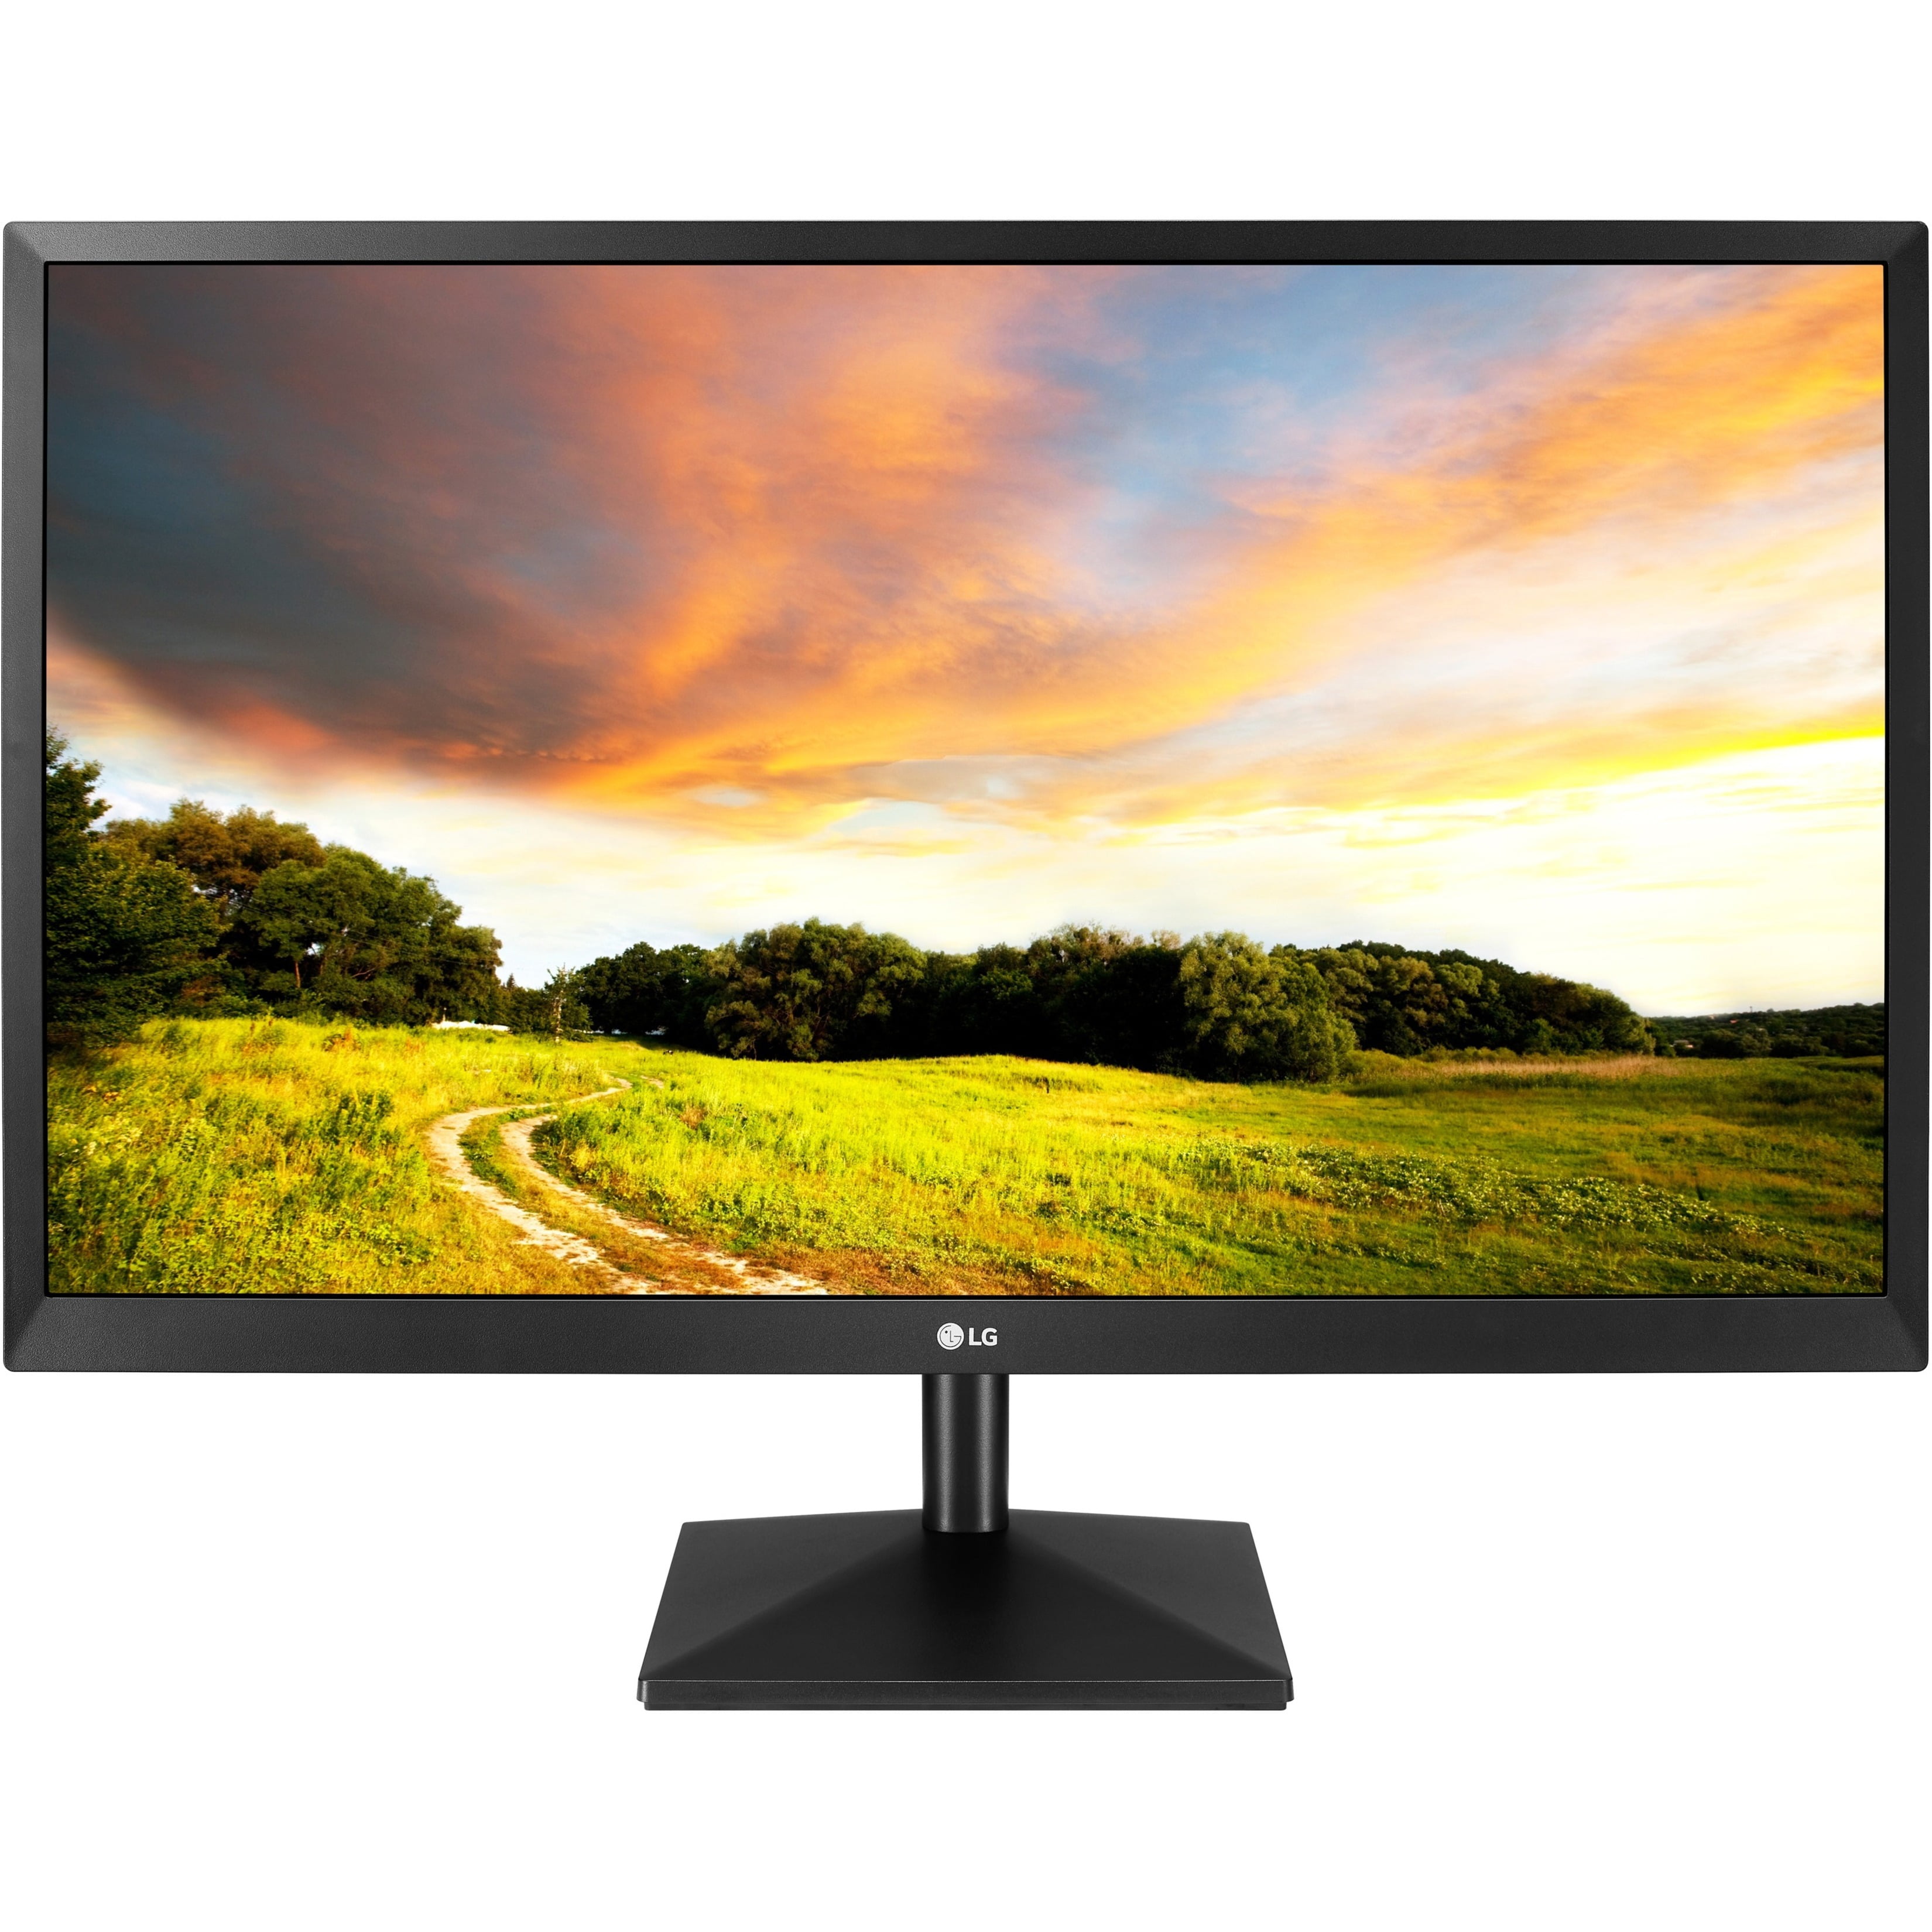 LG 27MK400H-B 27" Full HD LED LCD Monitor - Matte Black, Matte - Walmart.com